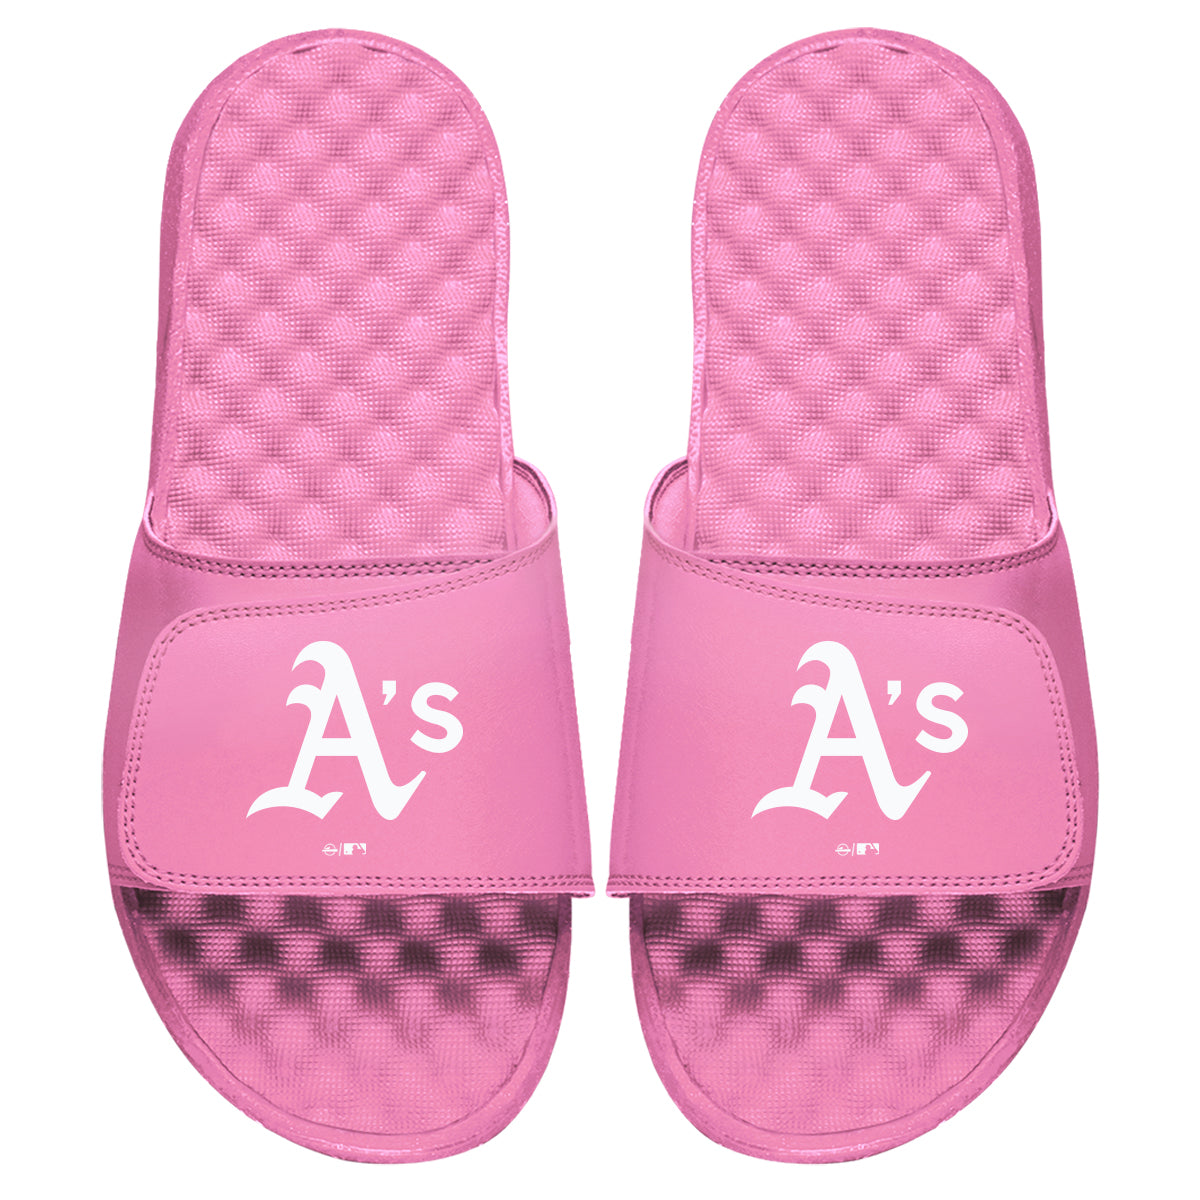 Oakland Athletics Primary Pink Slides